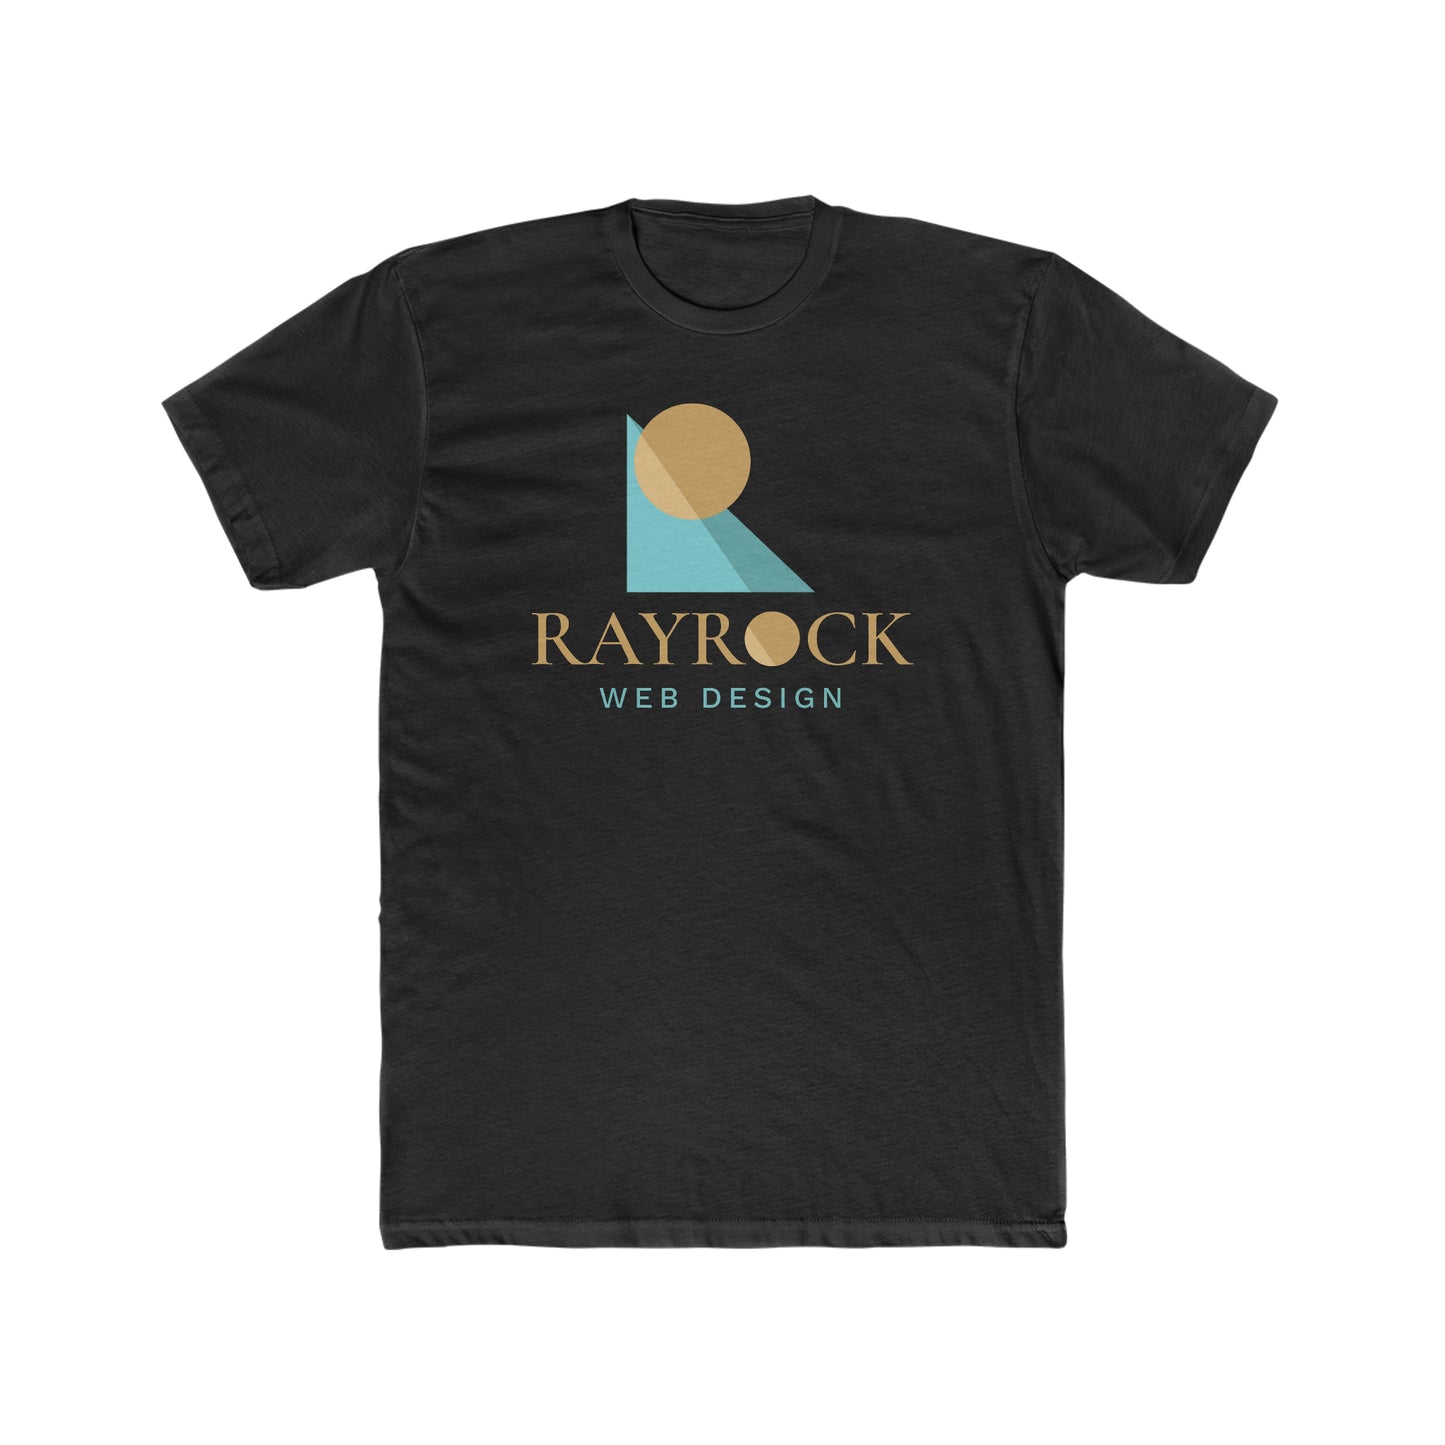 RAYROCK WEB DESIGN 2 Men's Cotton Crew Tee